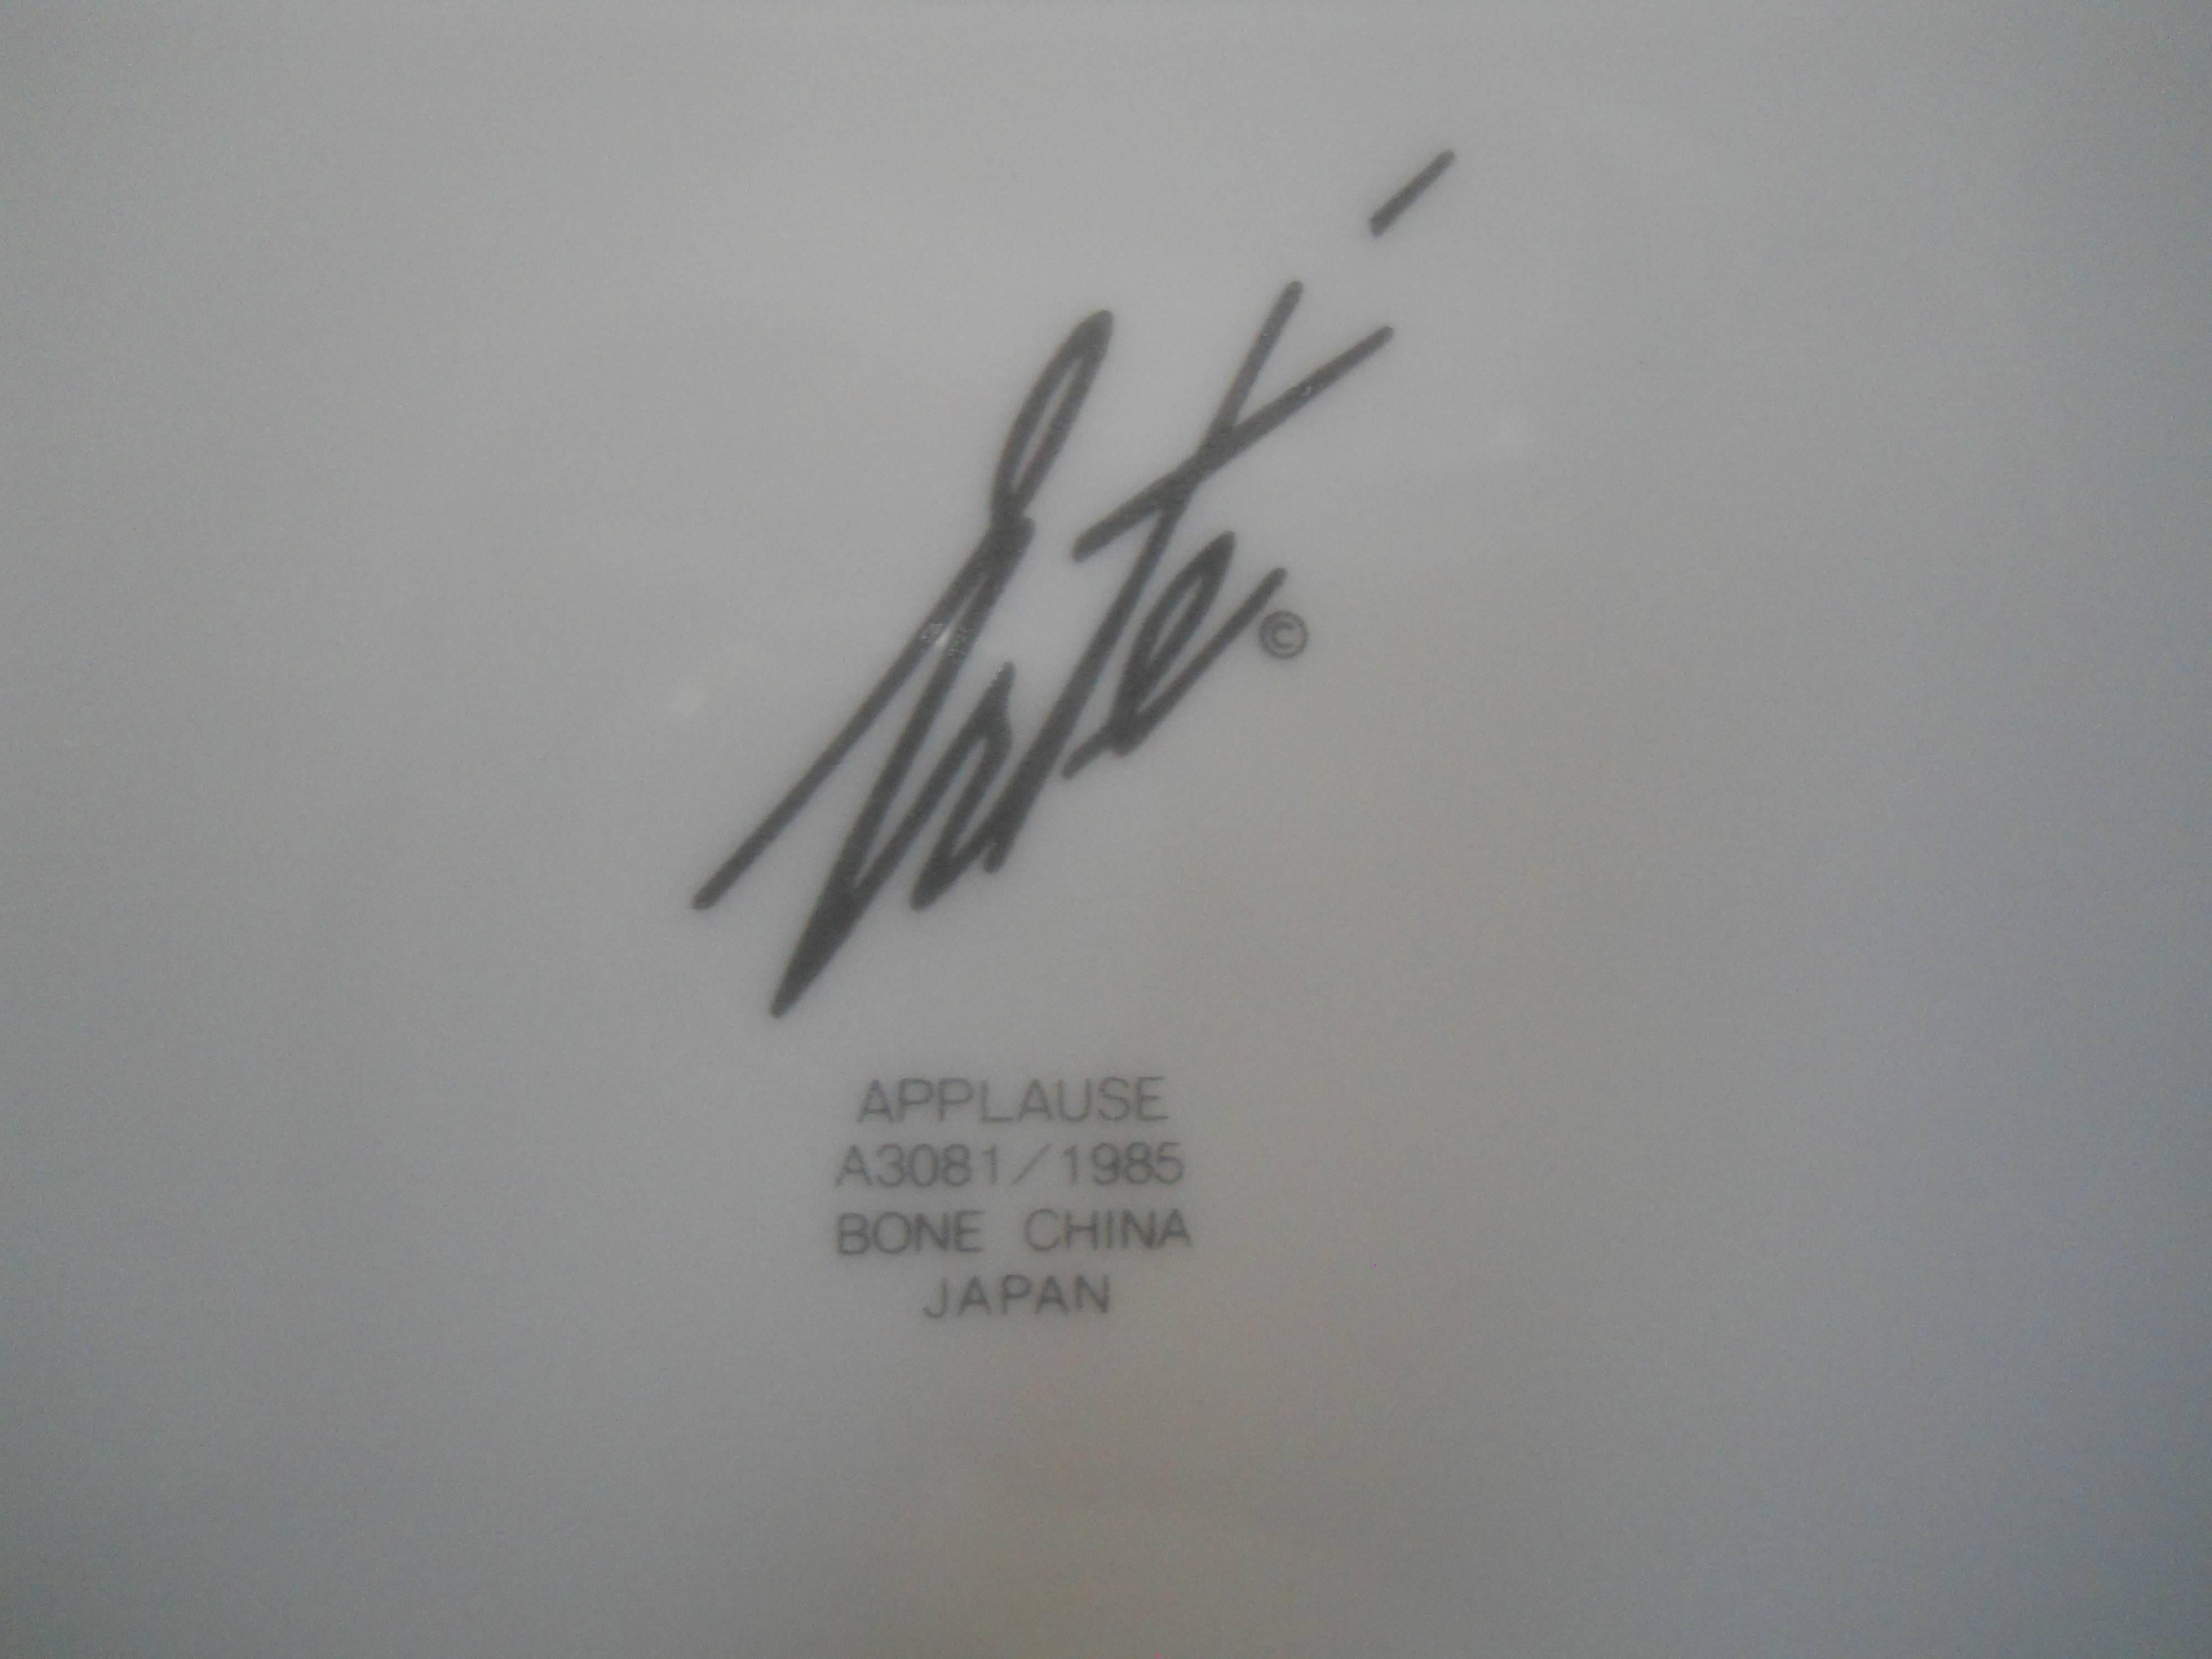 Japanese Erte' APPLAUSE A3081 Bone china MIKASA Collectors Plate 